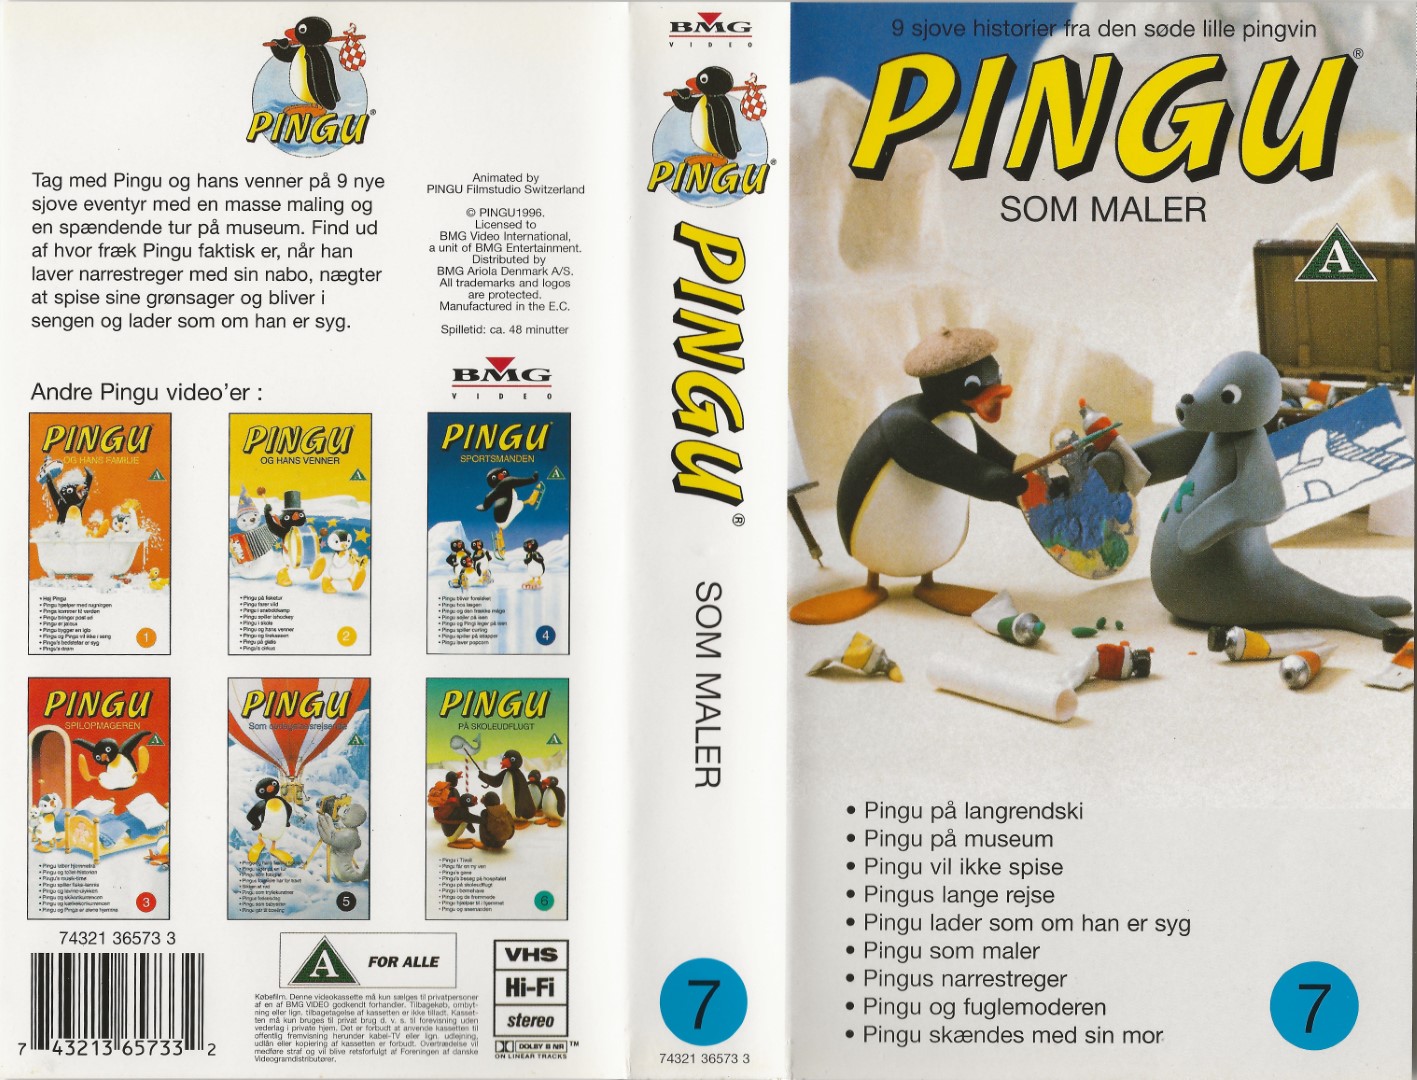 Pingu 7 - Pingu som maler  VHS BMG Video 1995